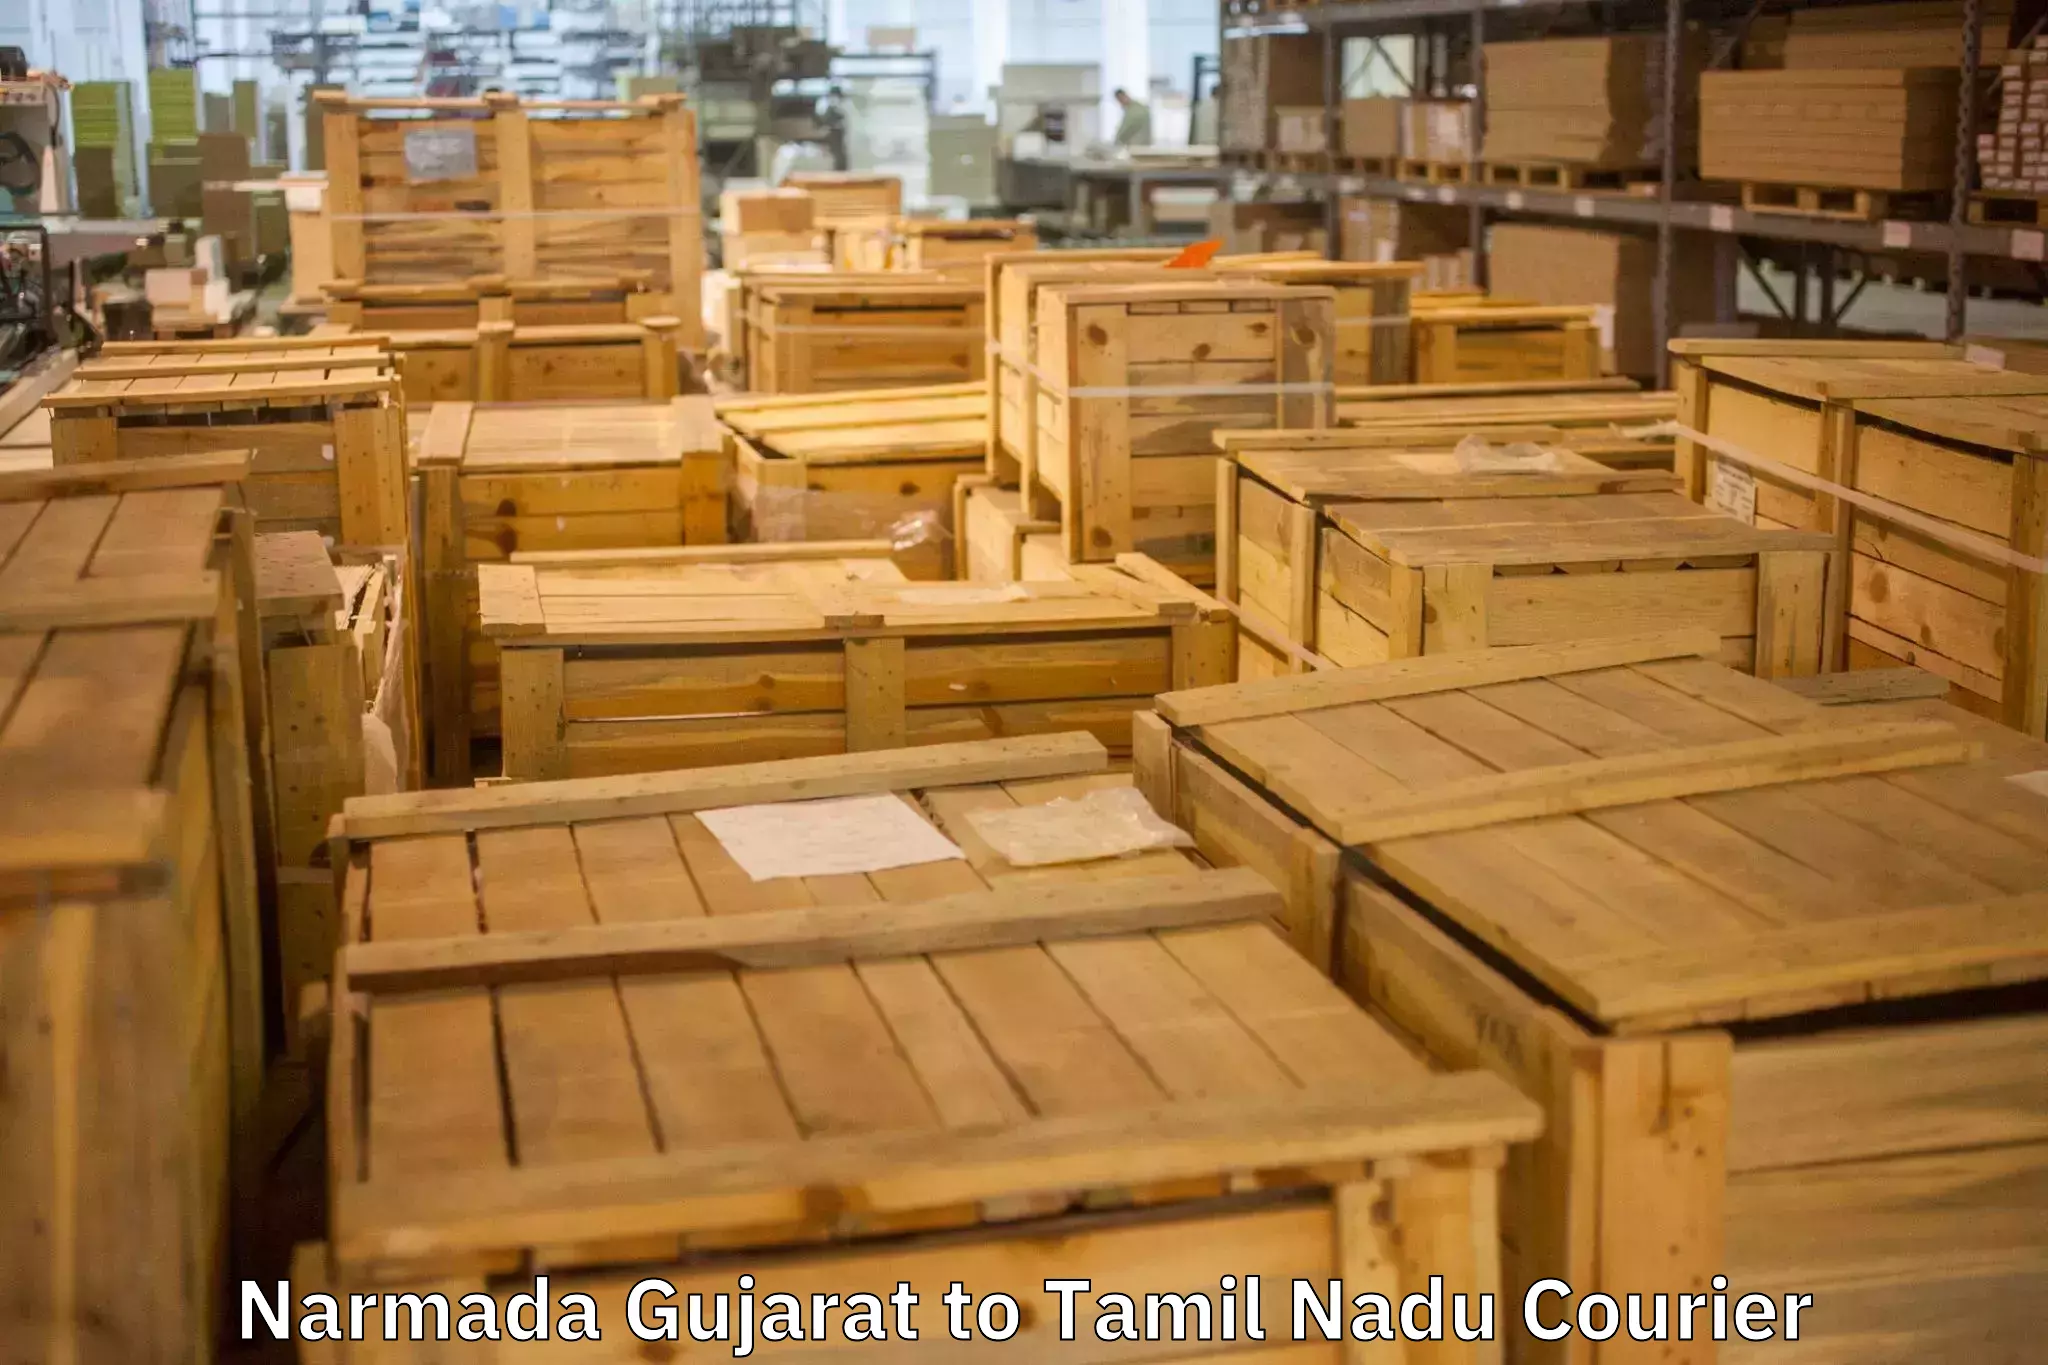 Professional moving company Narmada Gujarat to Manonmaniam Sundaranar University Tirunelveli